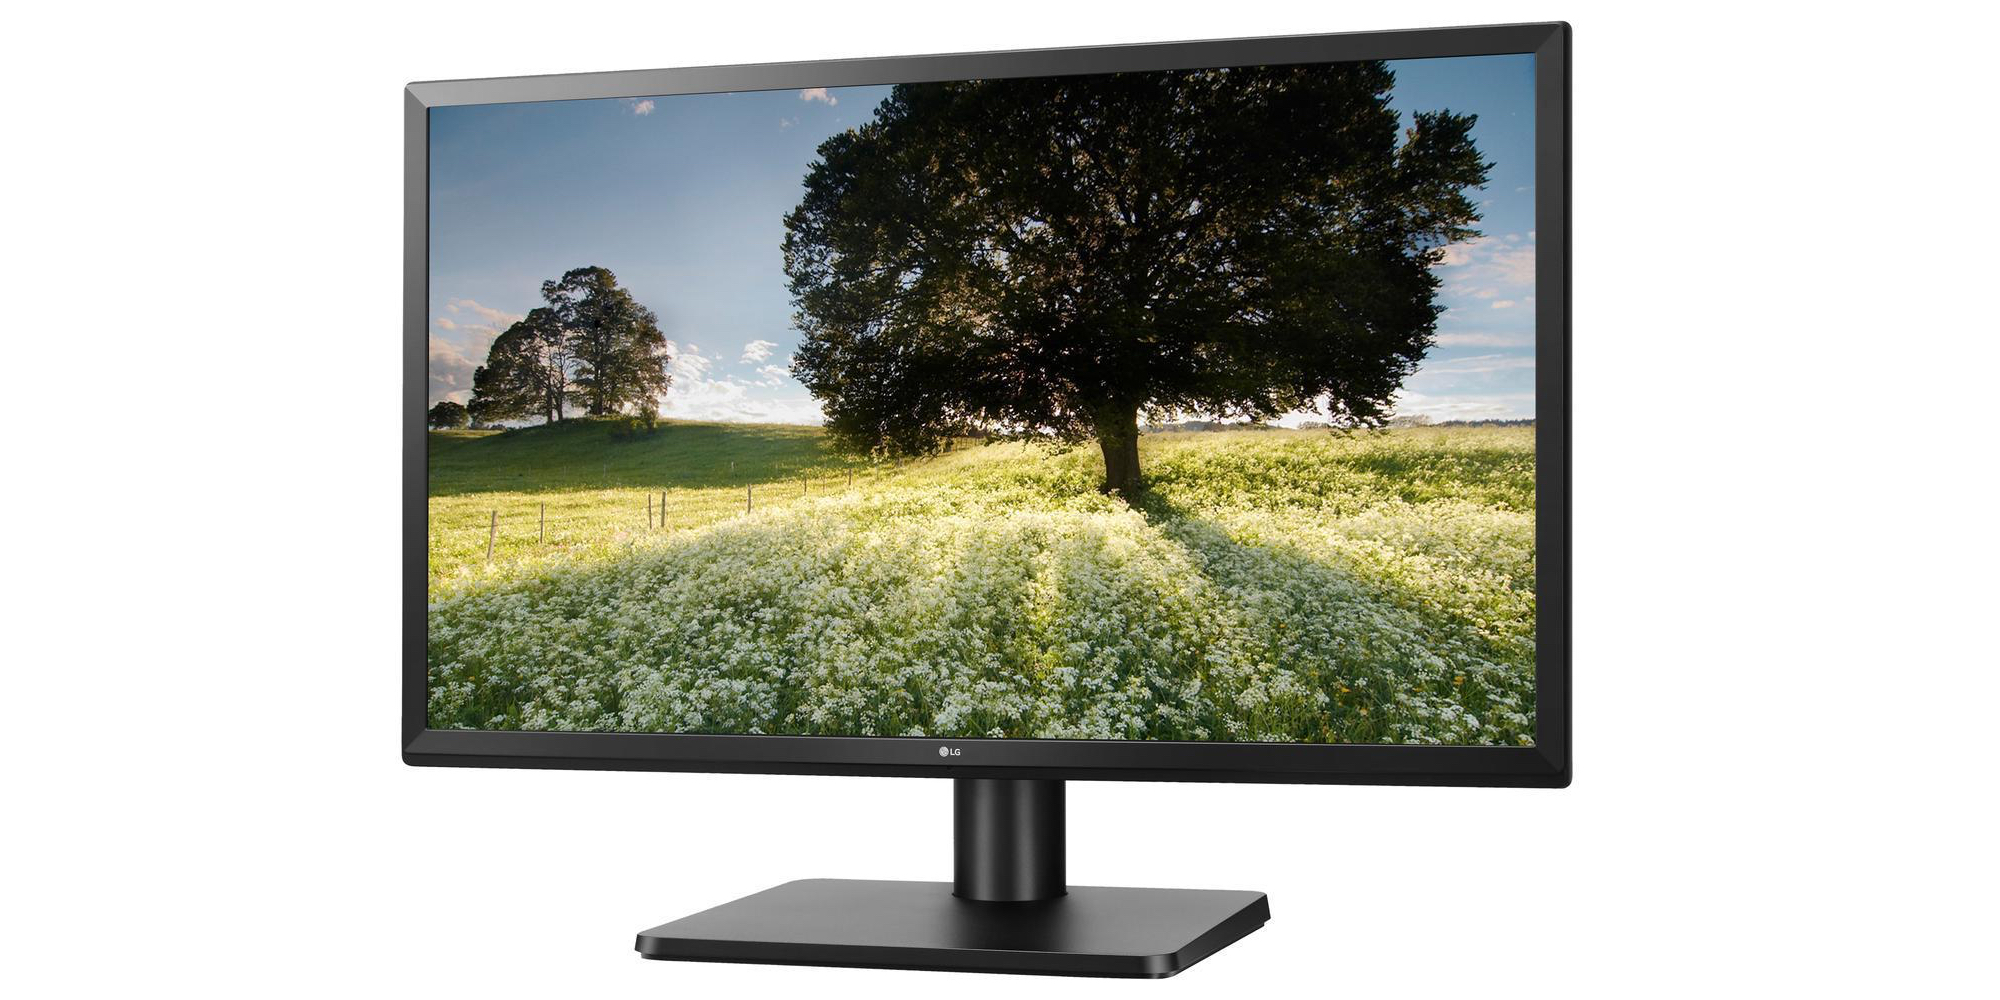 lg 27 inch 4k monitor best buy